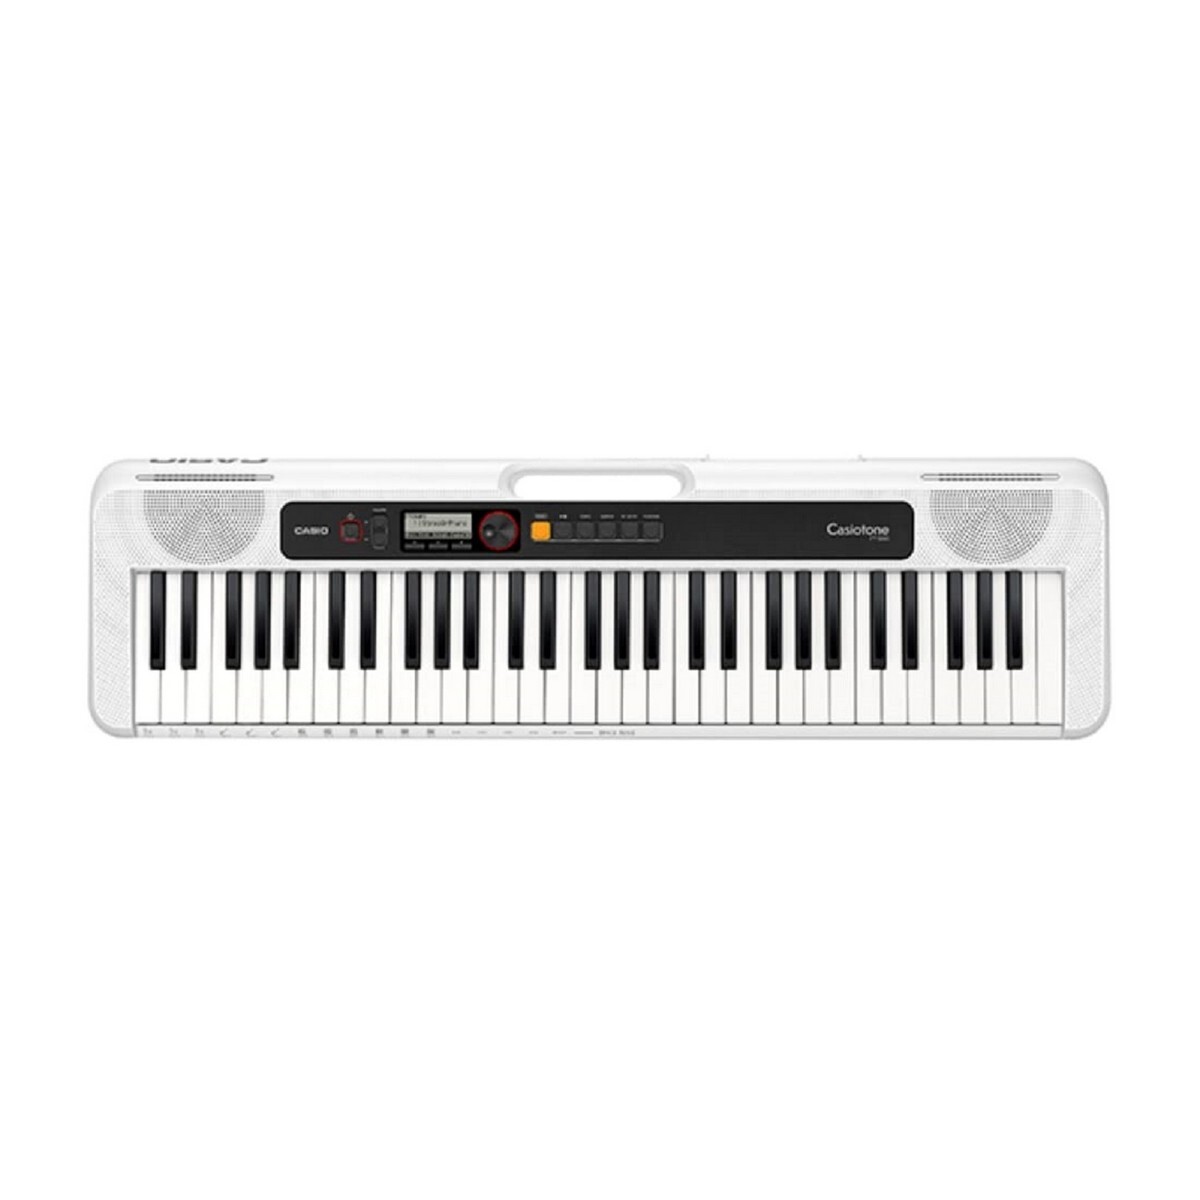 Casio Organ CT-S200 WE +LAD6 Standard Keyboards